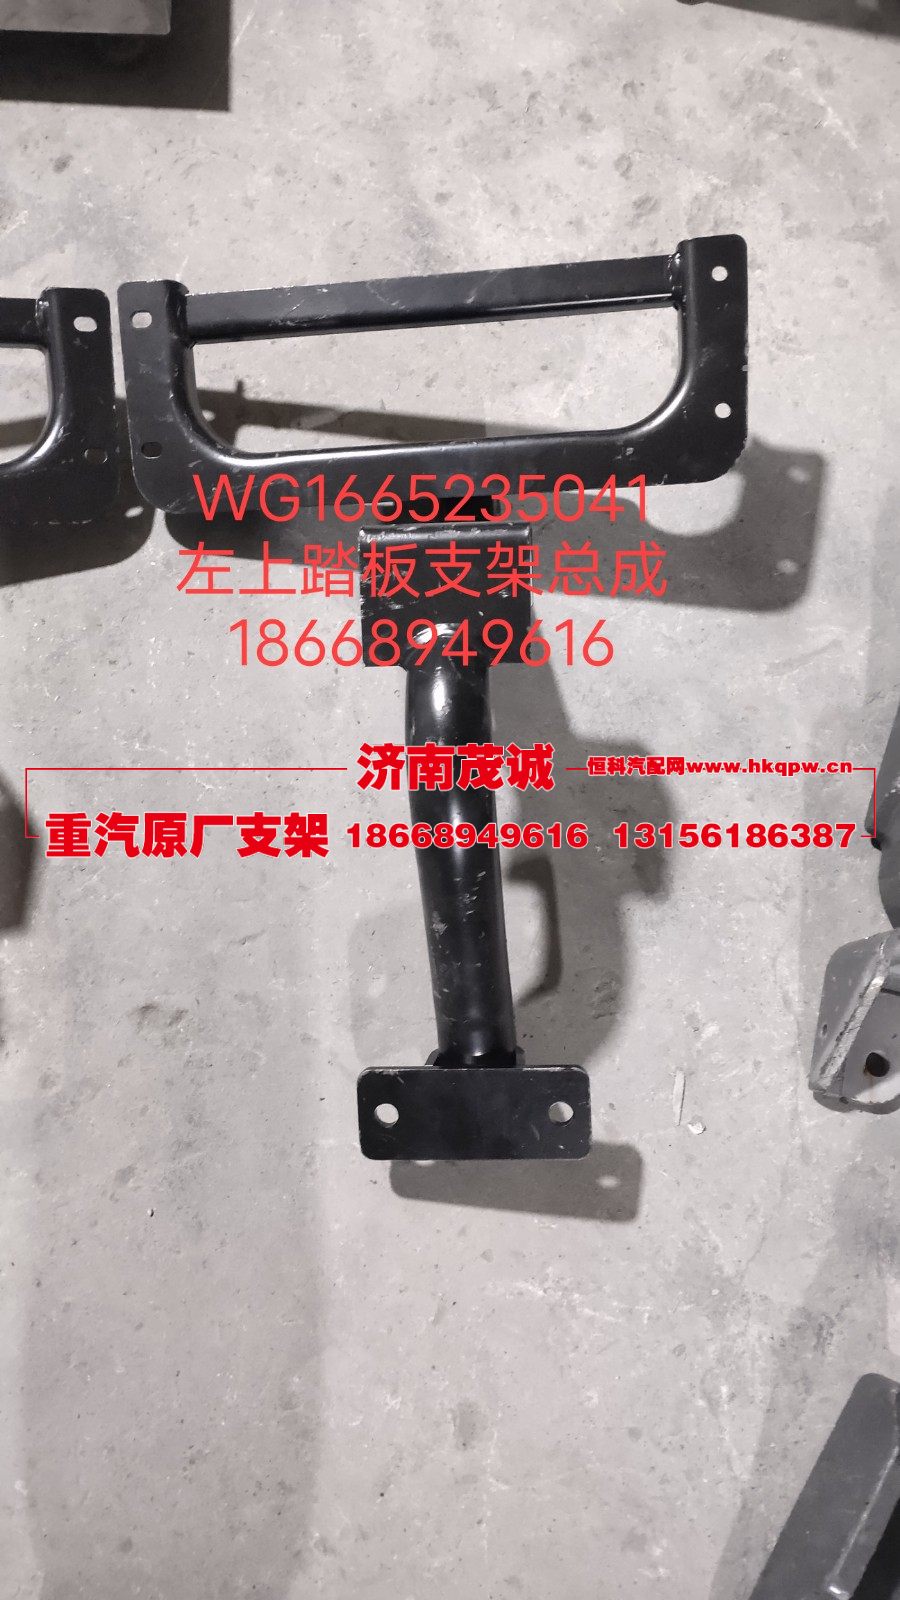 WG1665235041,左上踏板支架总成,济南茂诚商贸有限公司